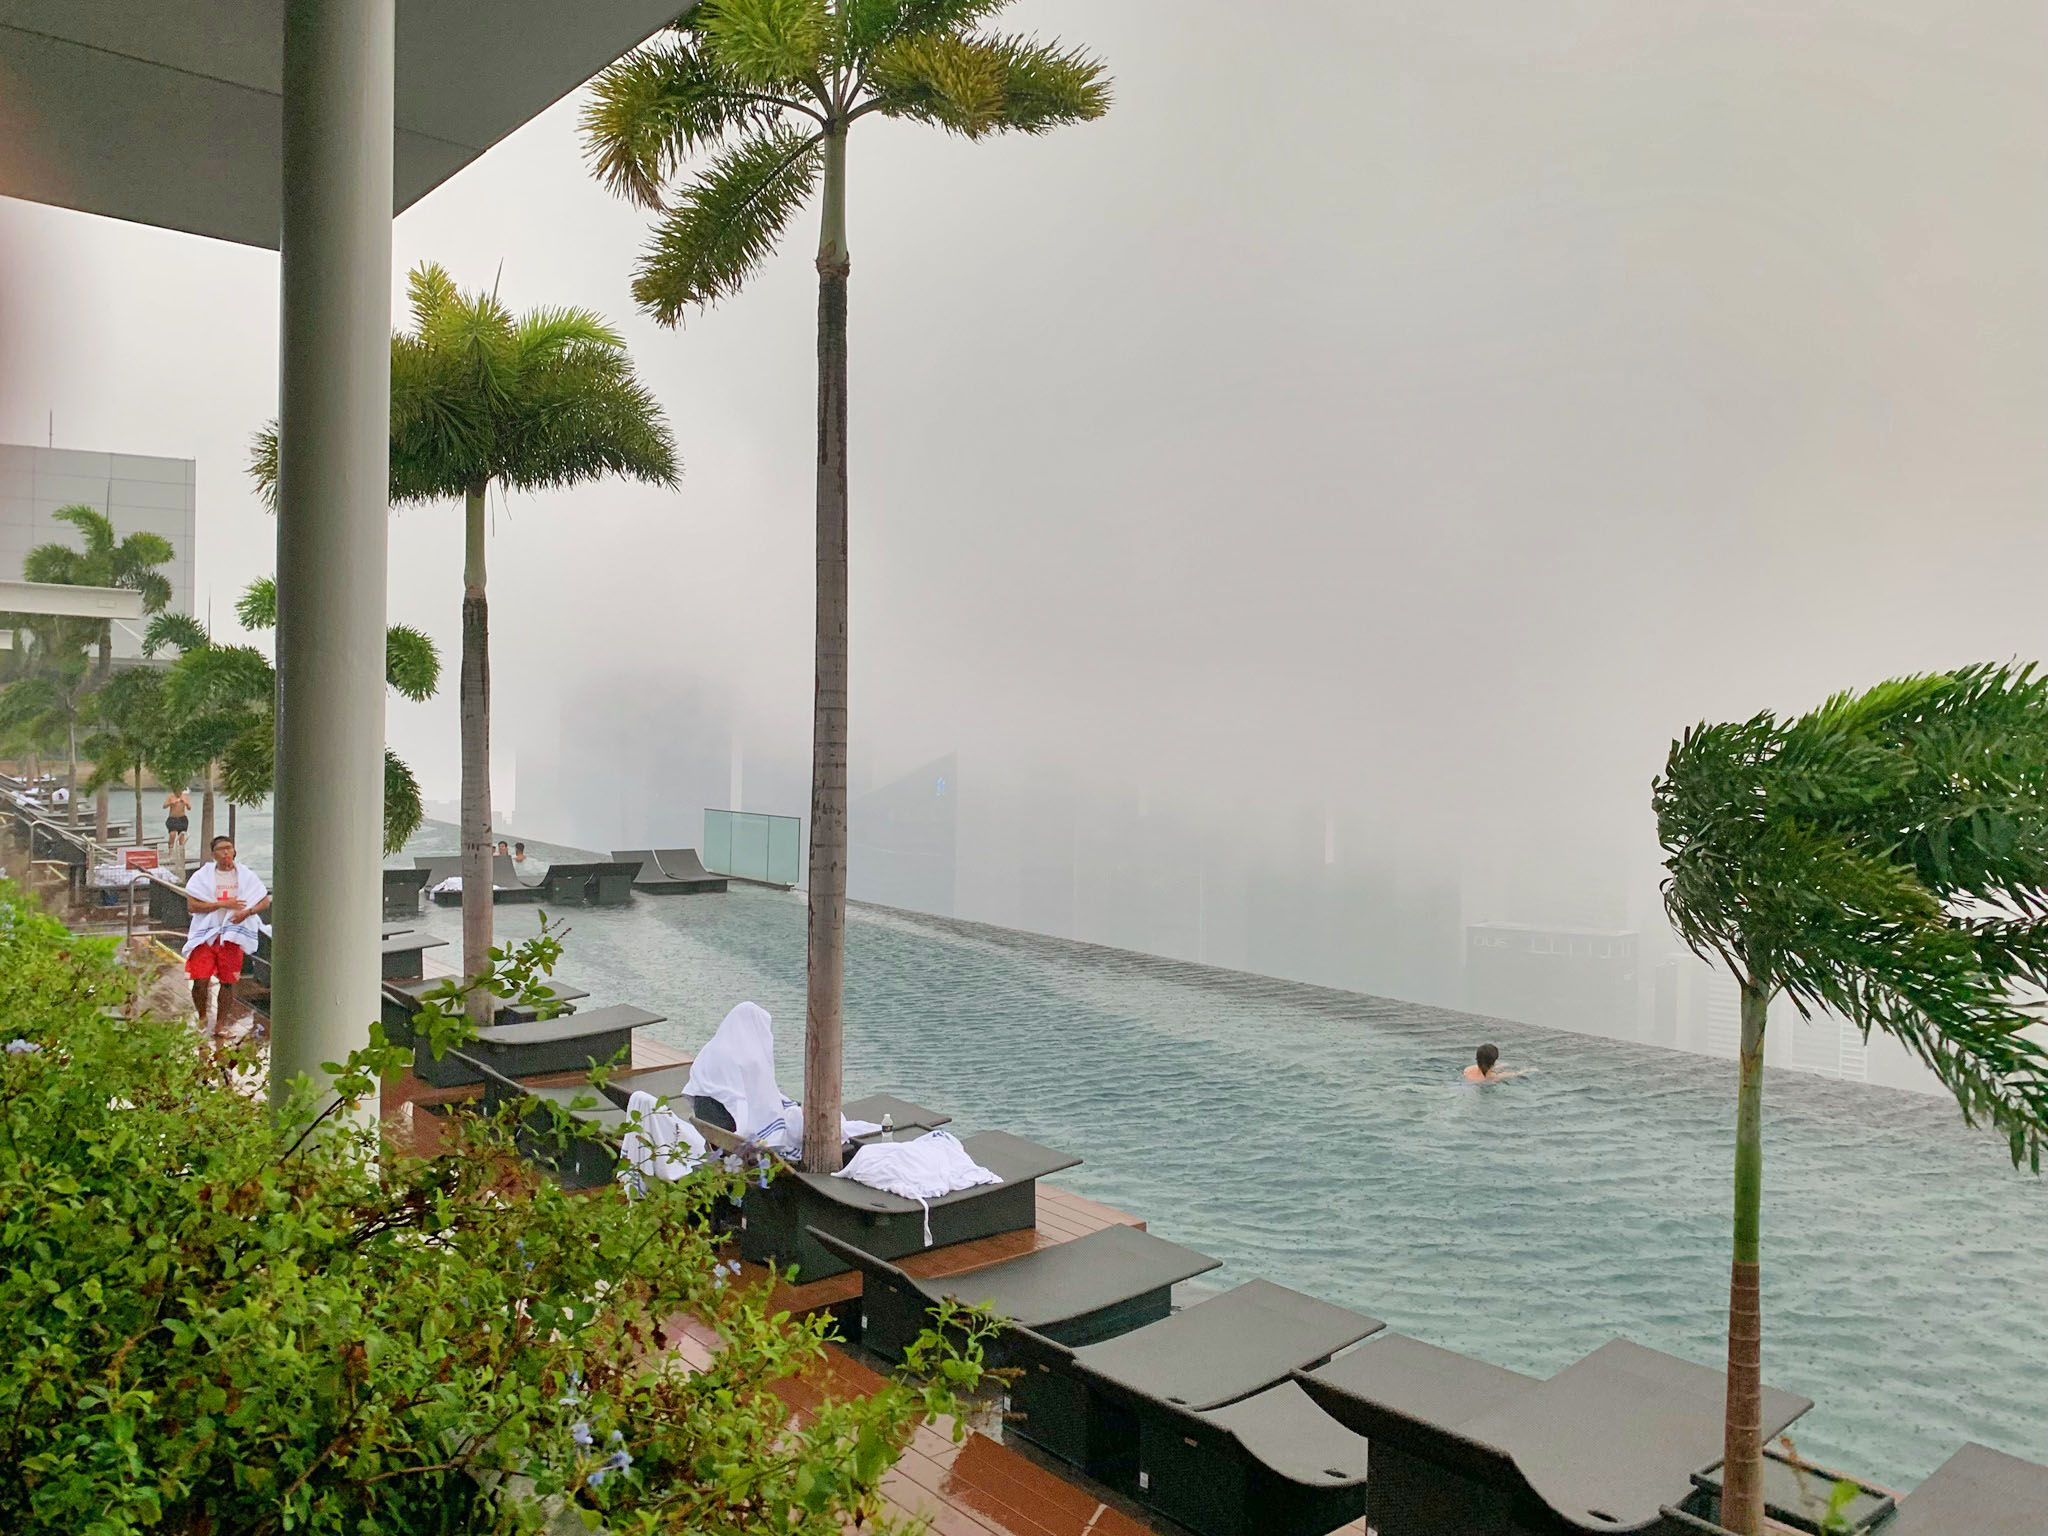 Marina Bay Sands Infinity Pool roof